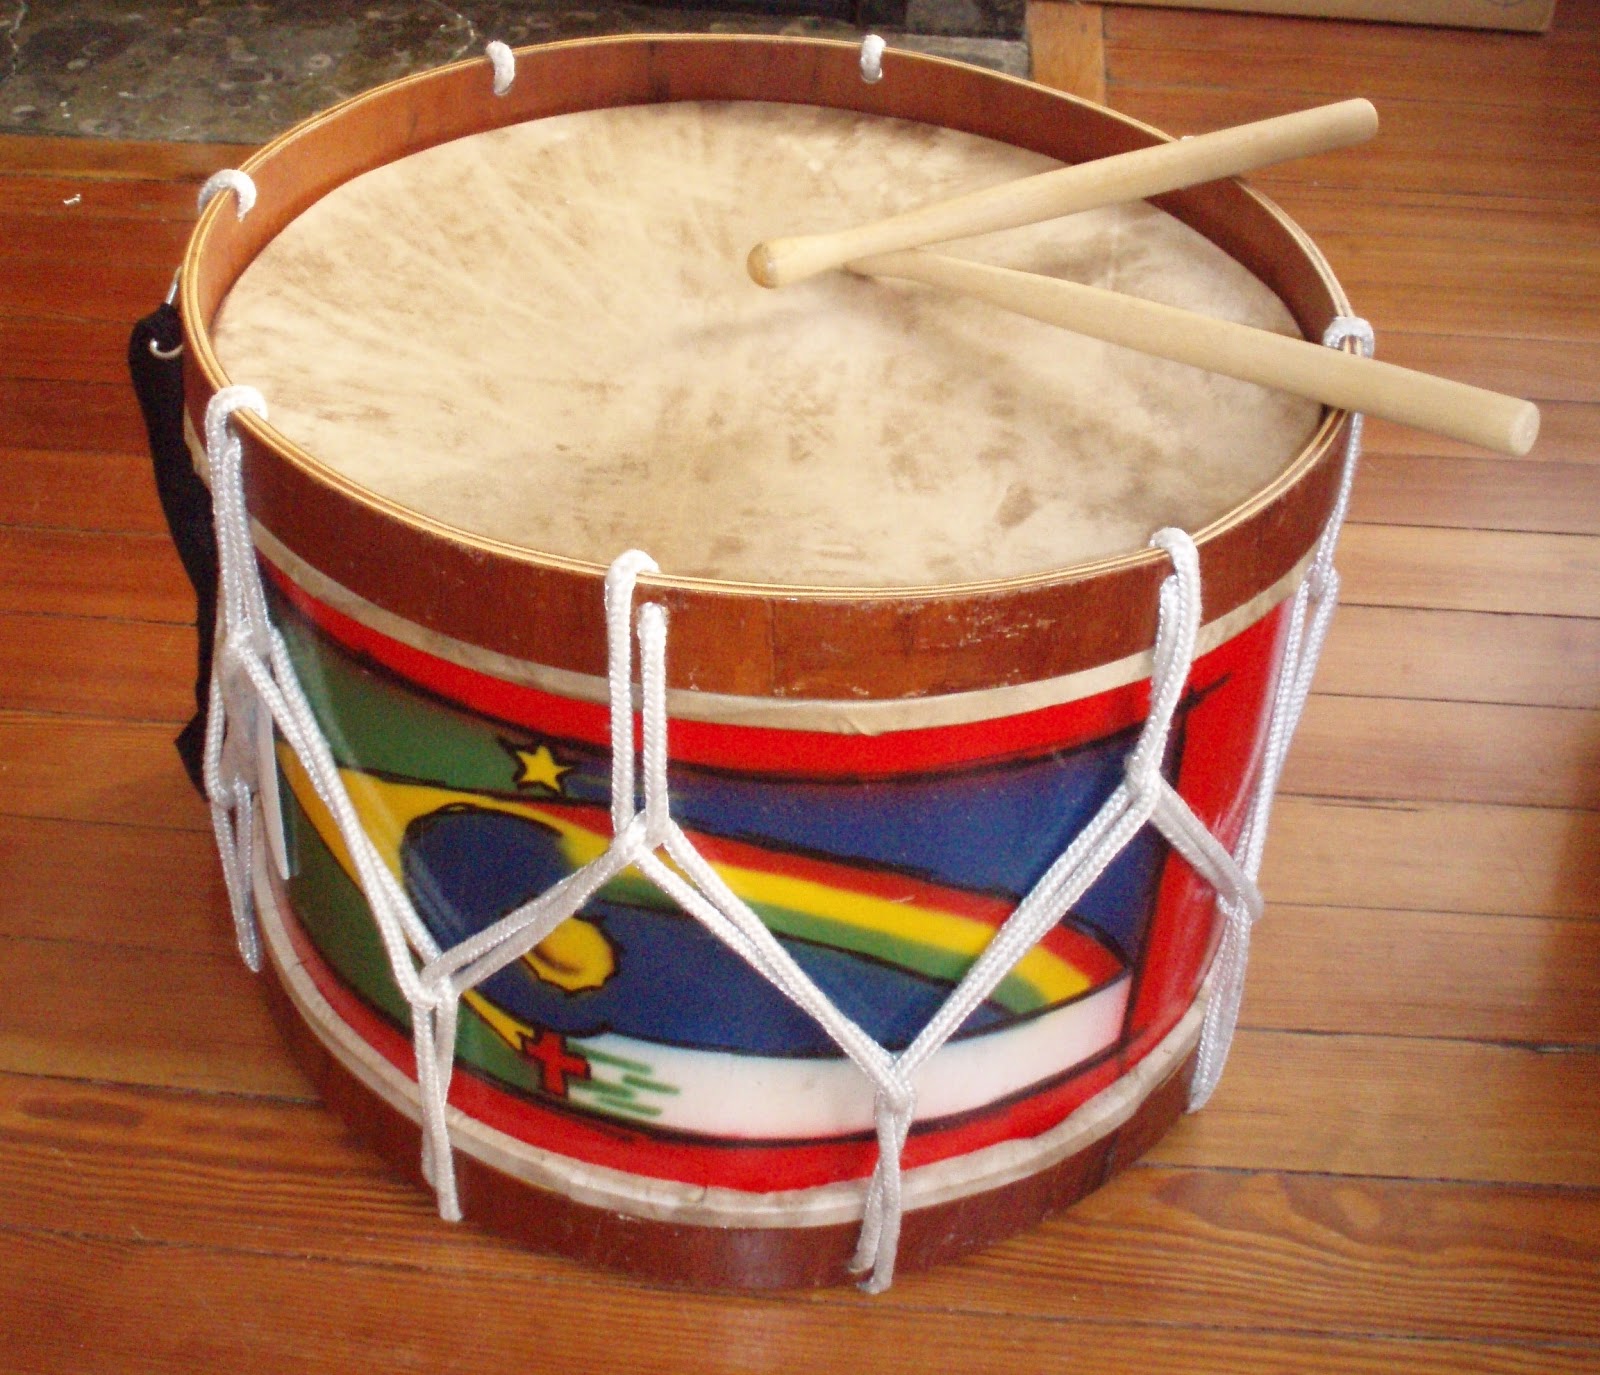 File:Music instrument alfaia.jpg - Wikimedia Commons